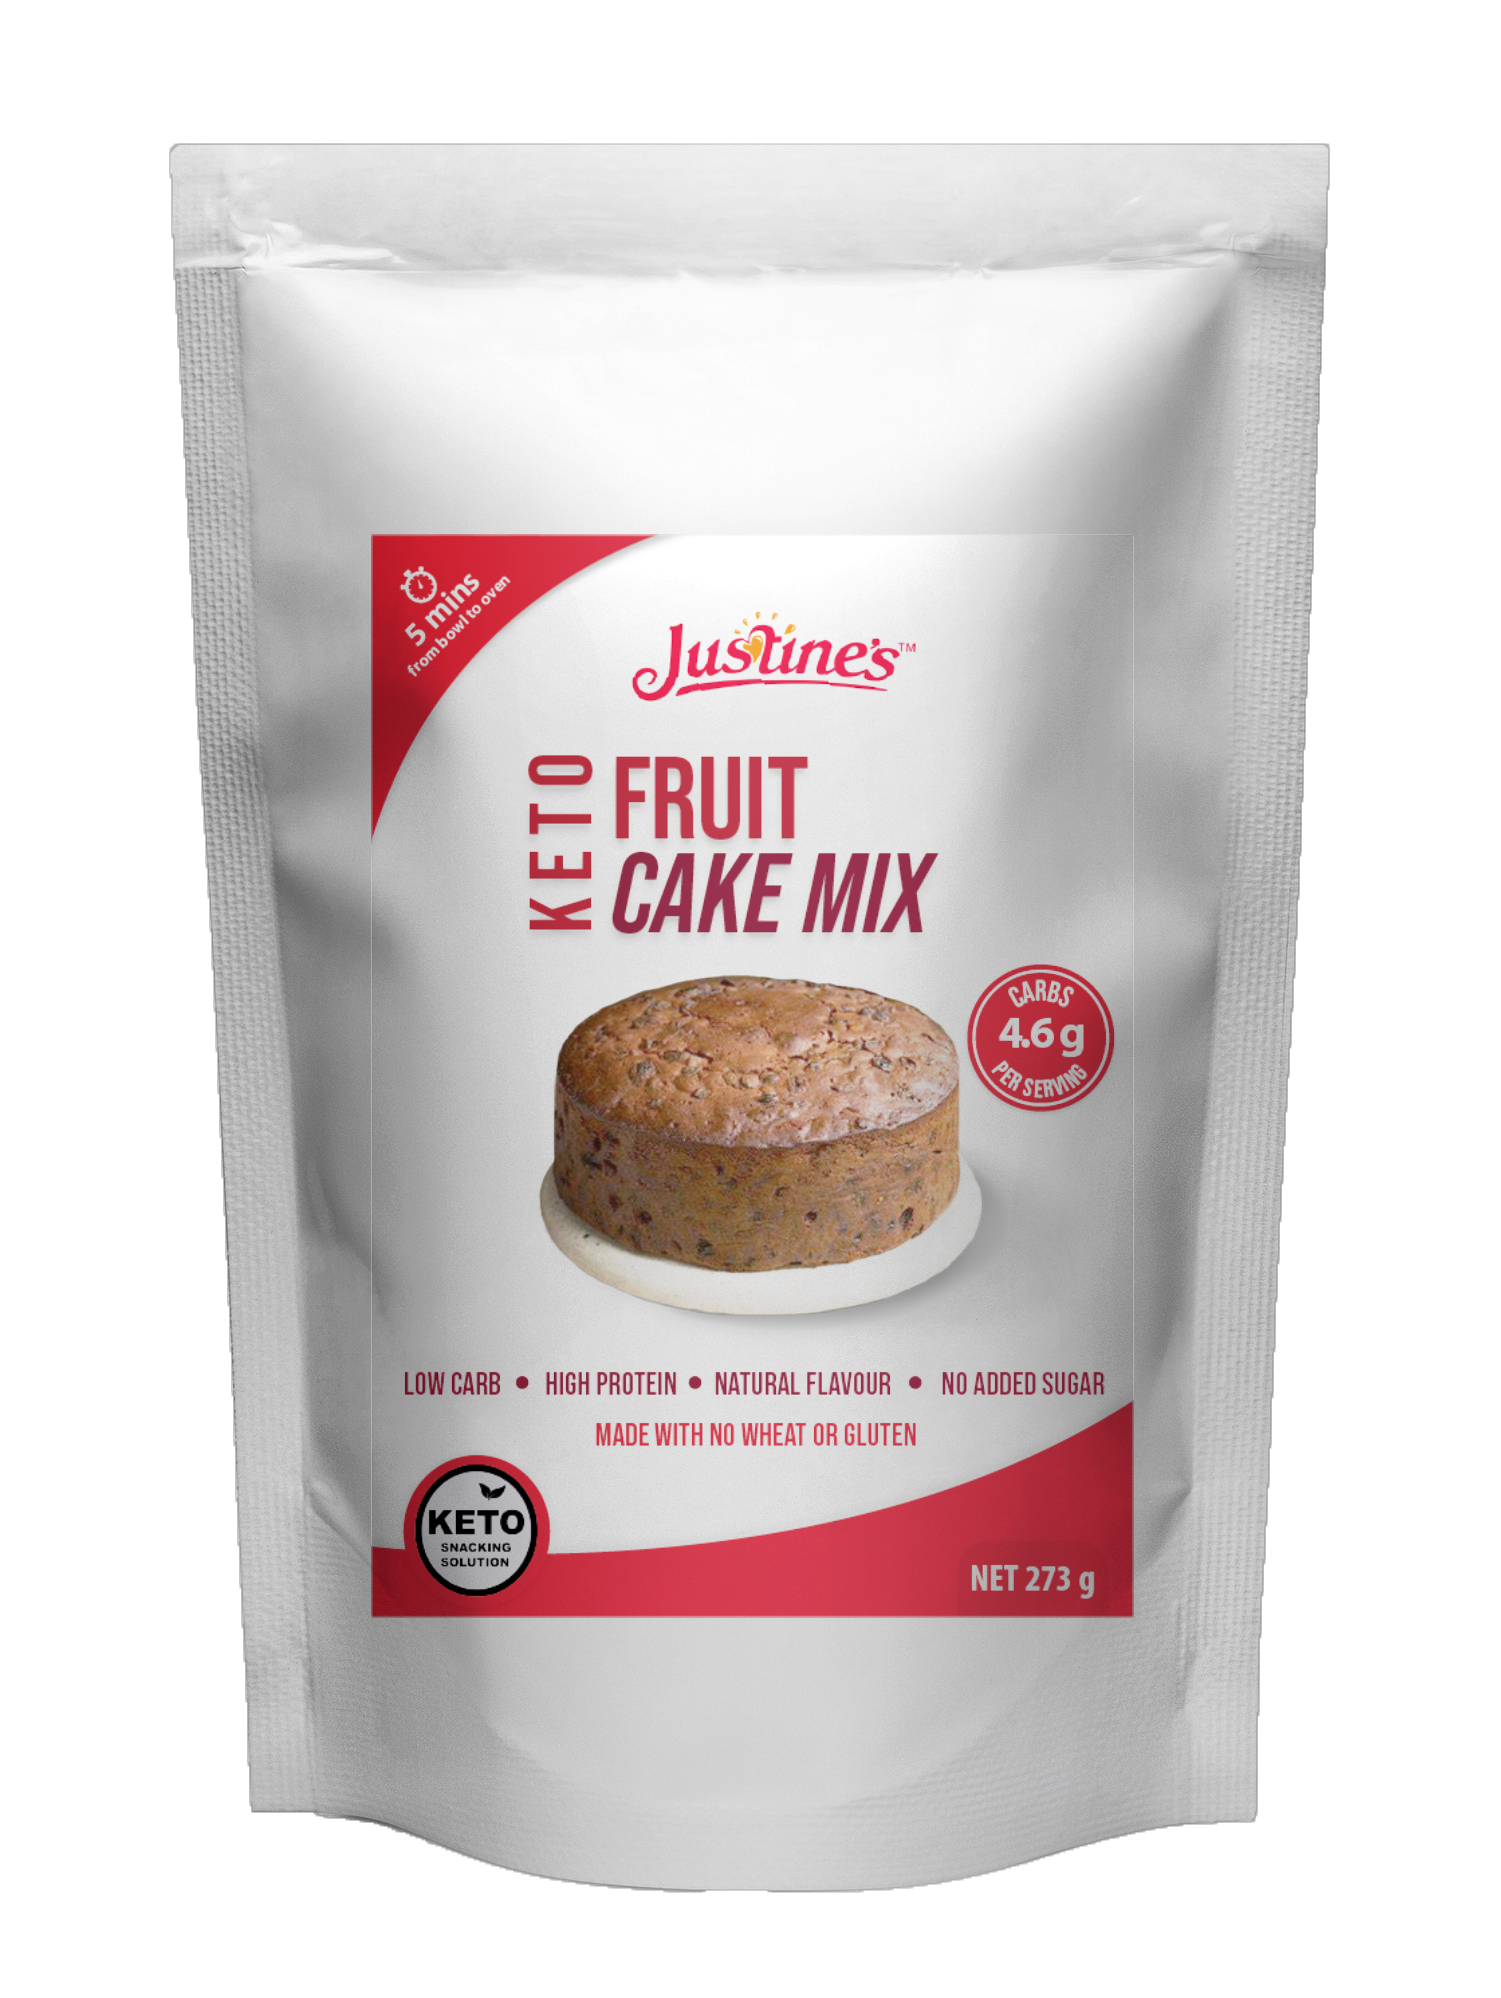 Justine's Keto Fruit Cake Mix